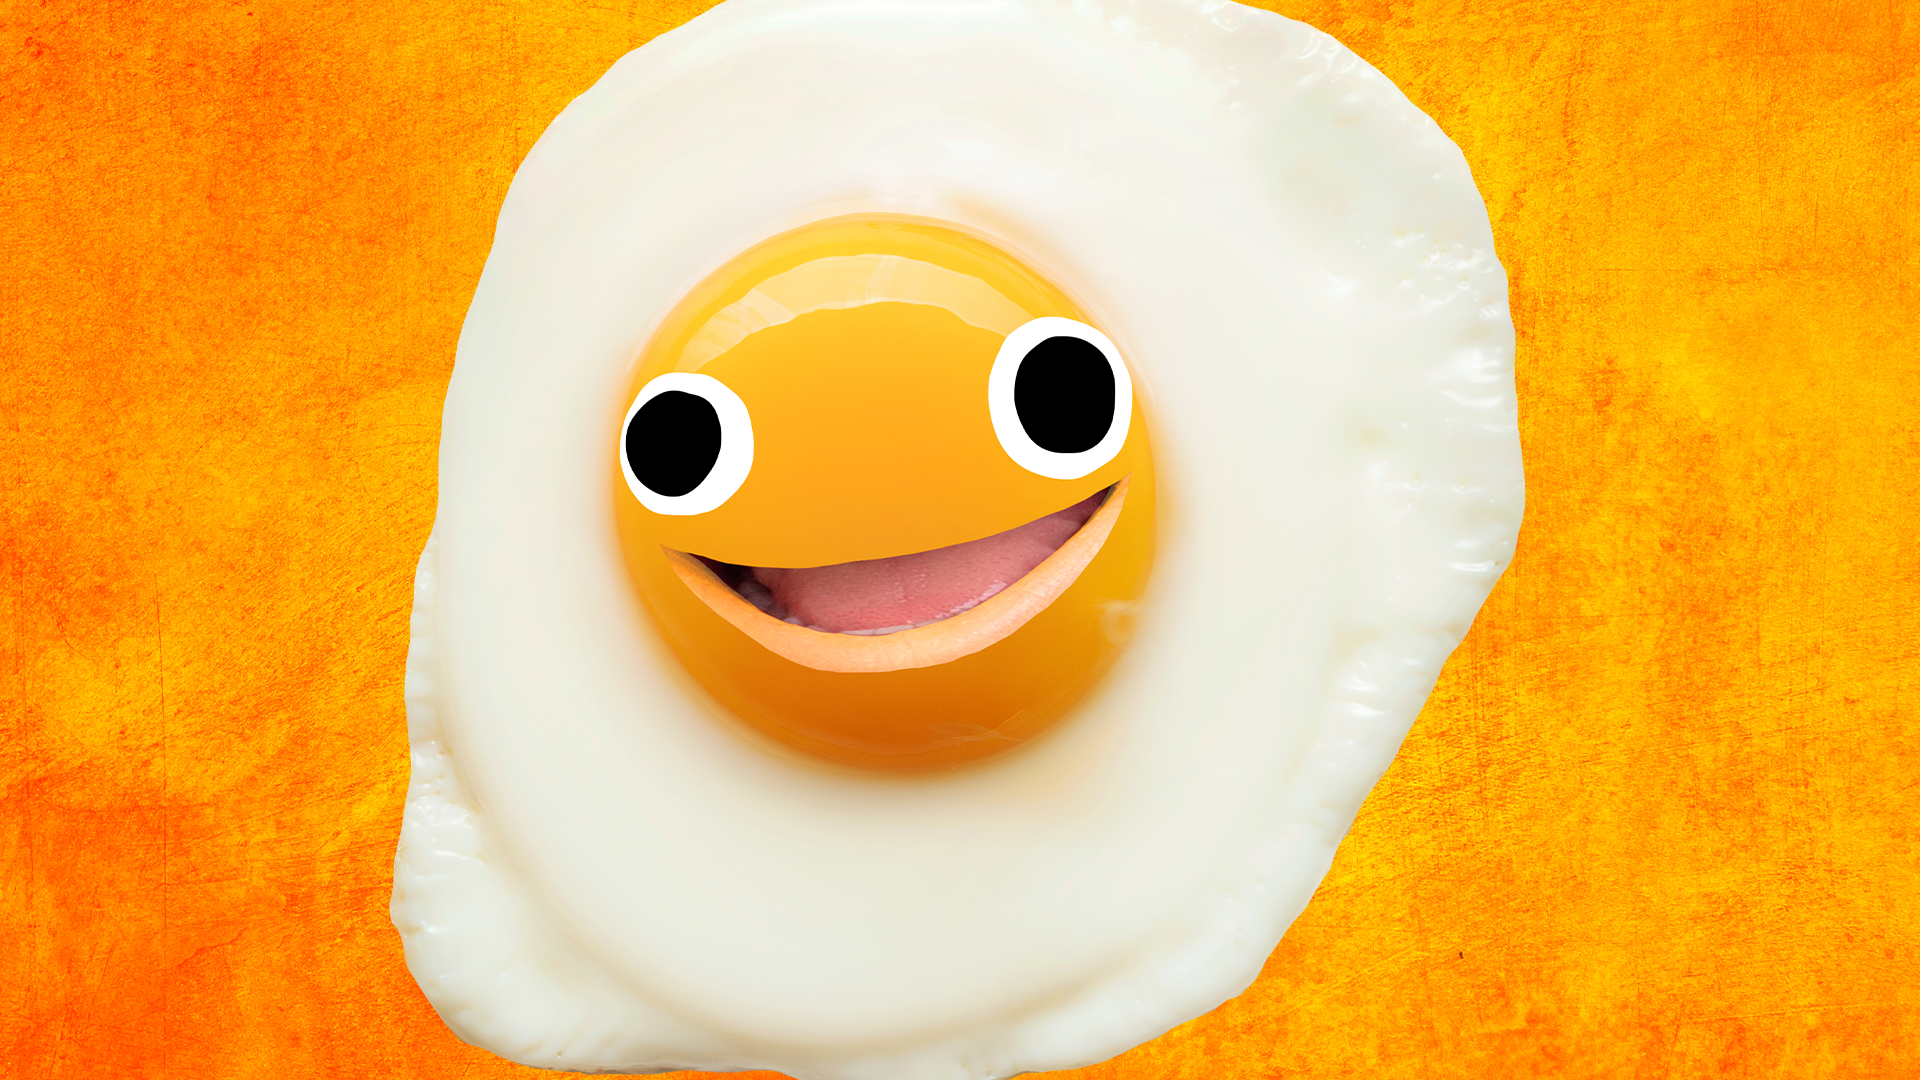 Smiley fried egg on orange background